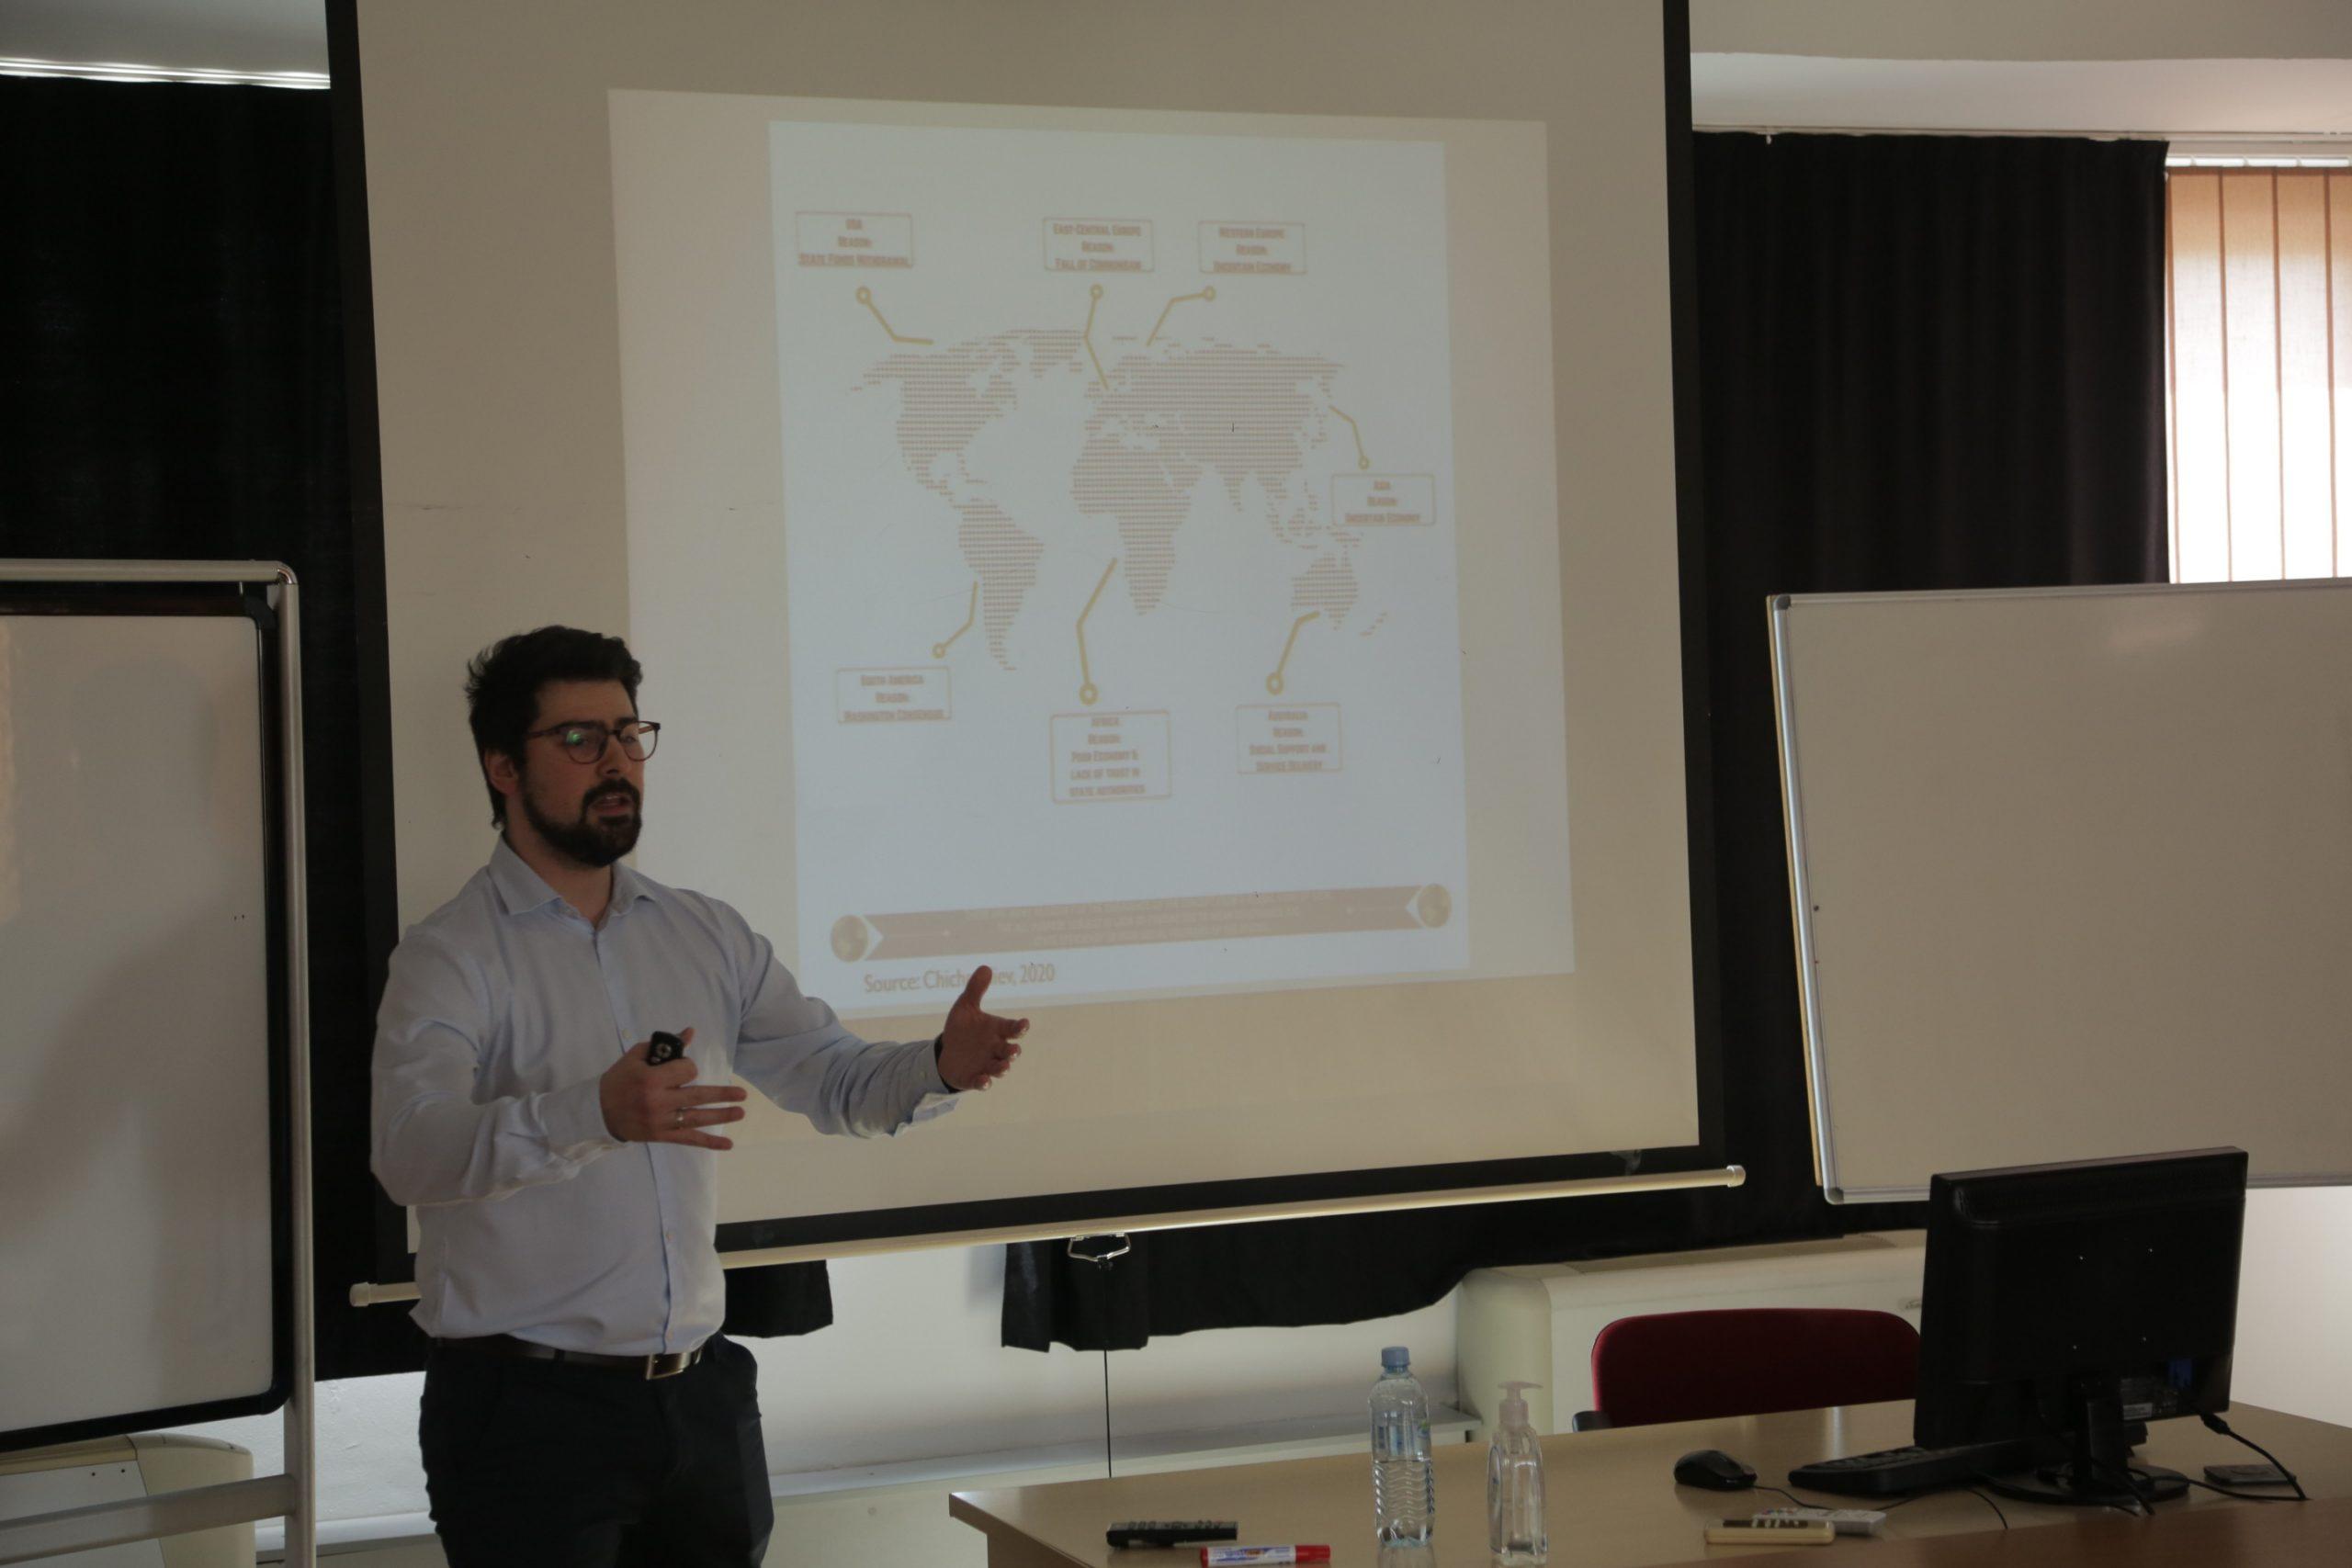 Lecture on “Social entrepreneurship”, by Stefan Chichevaliev Ph.D.